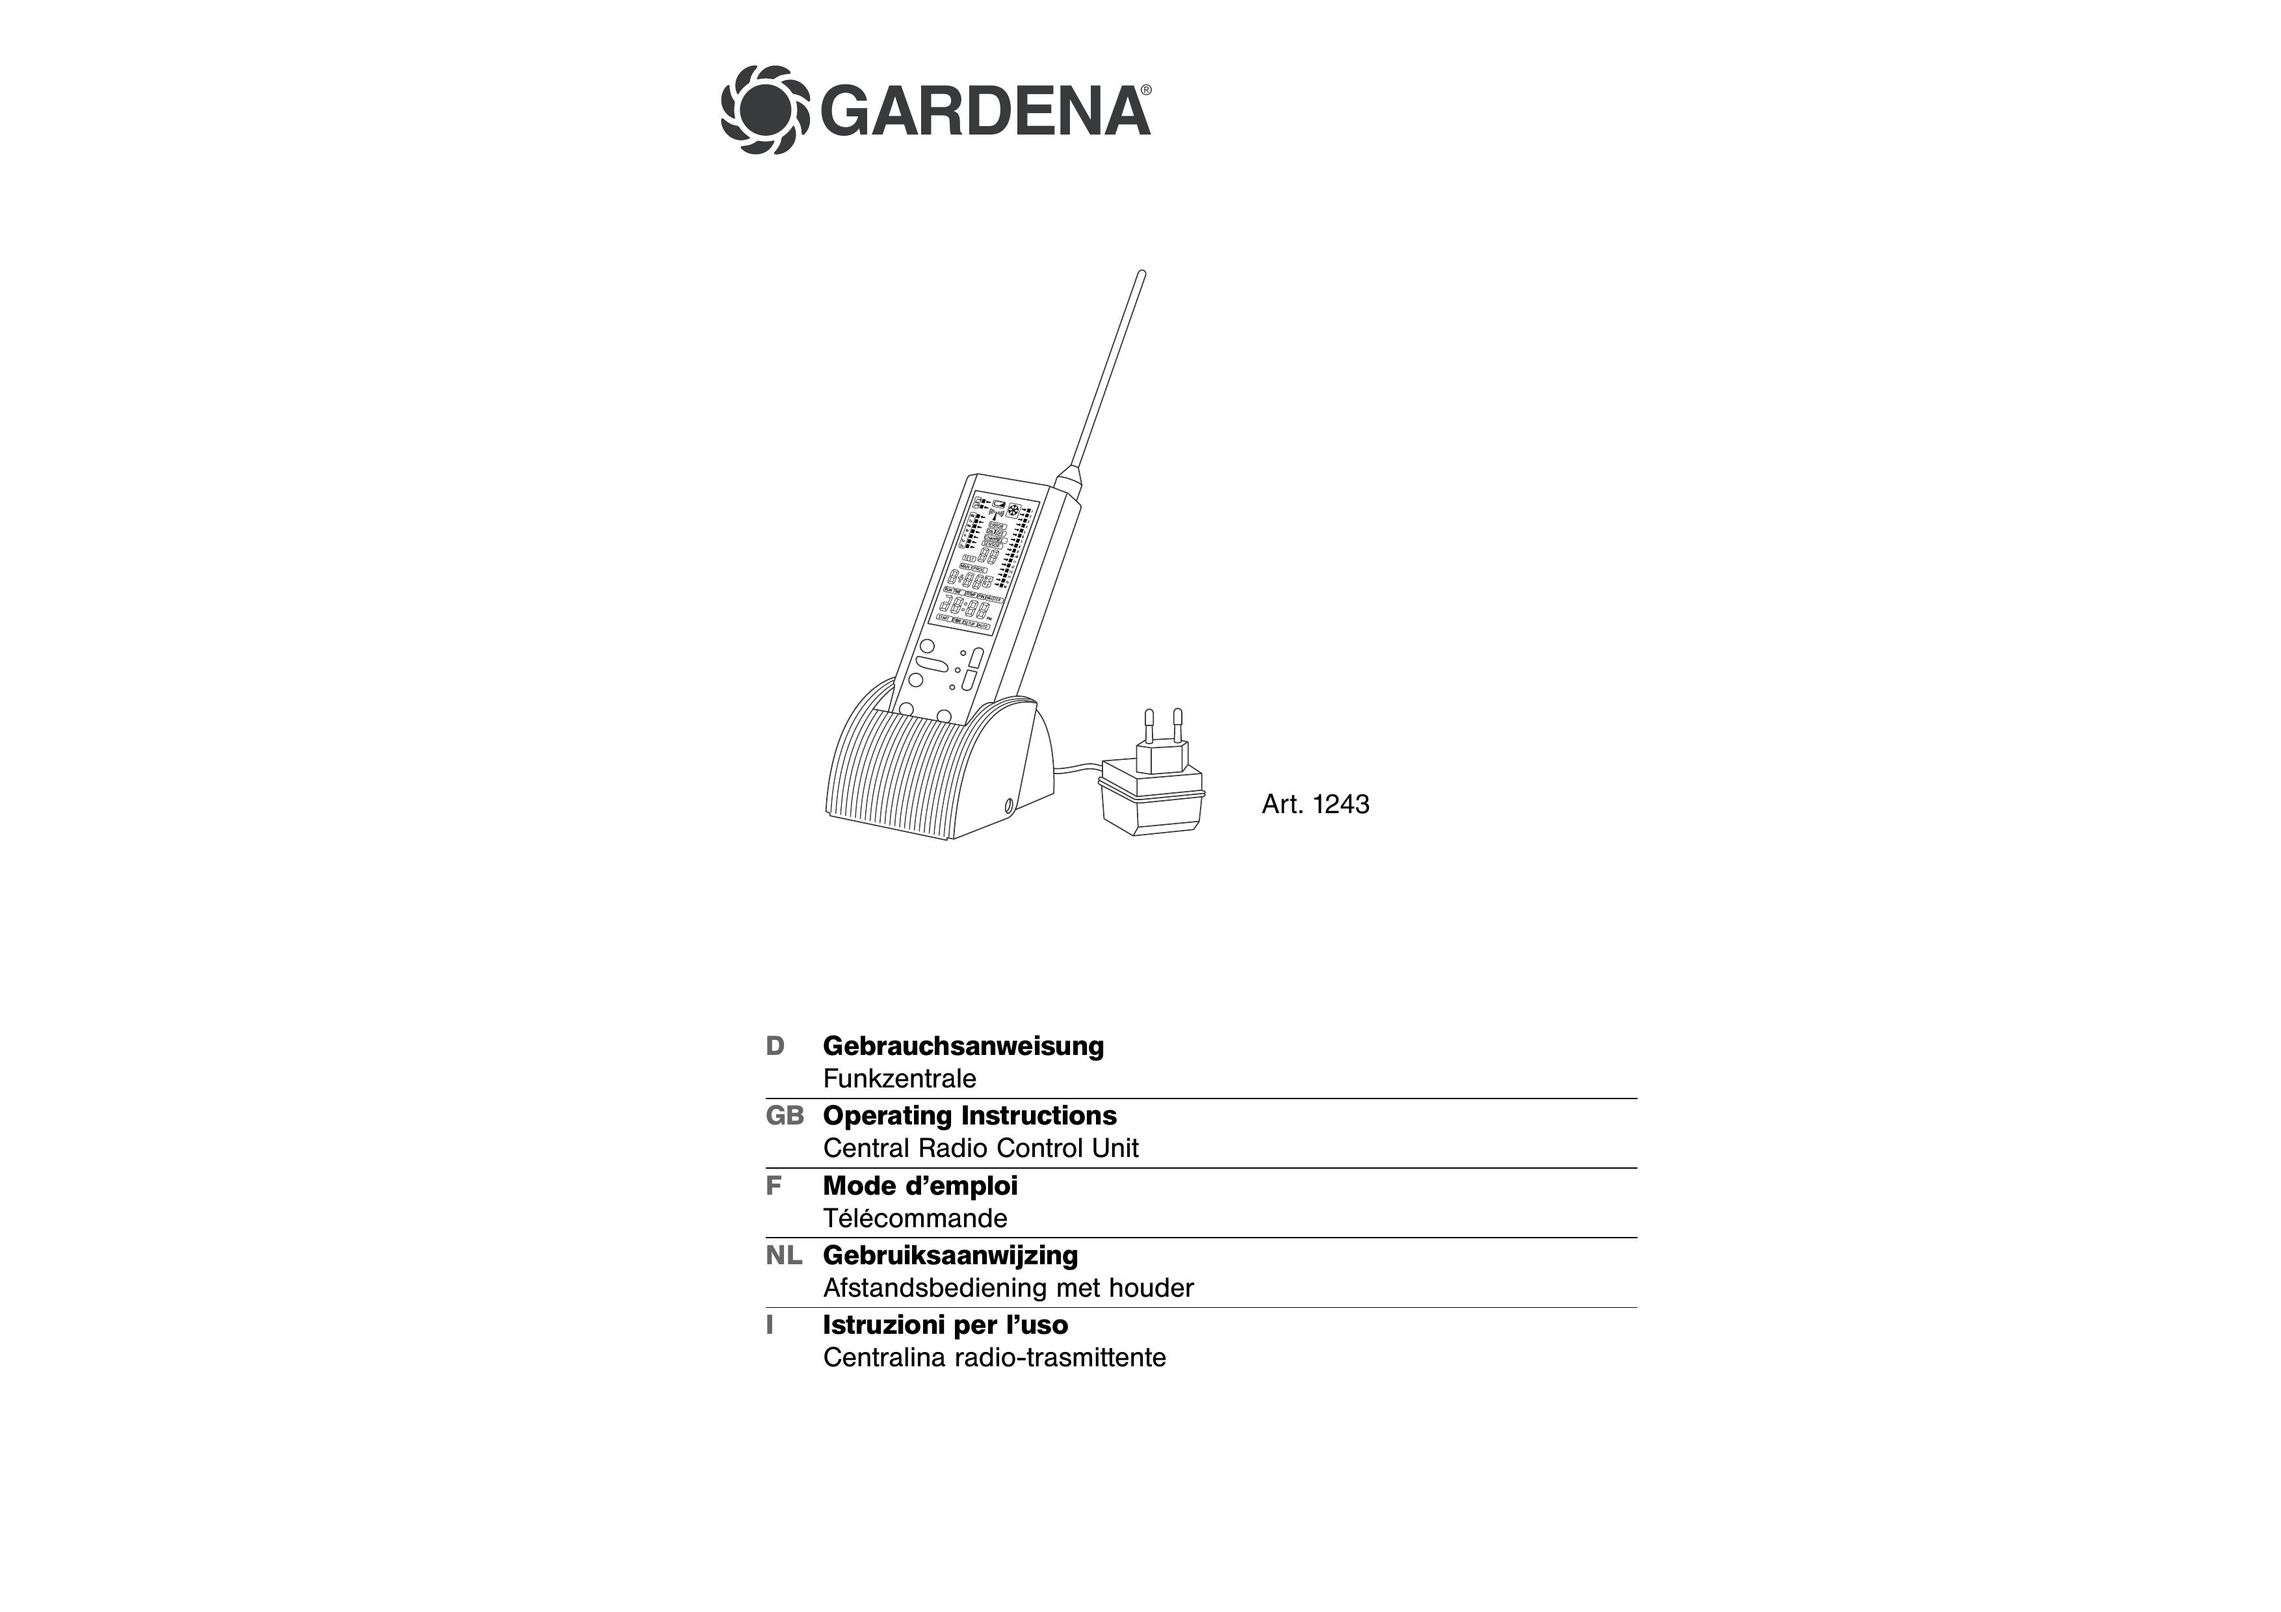 Gardena 1243 Two-Way Radio User Manual